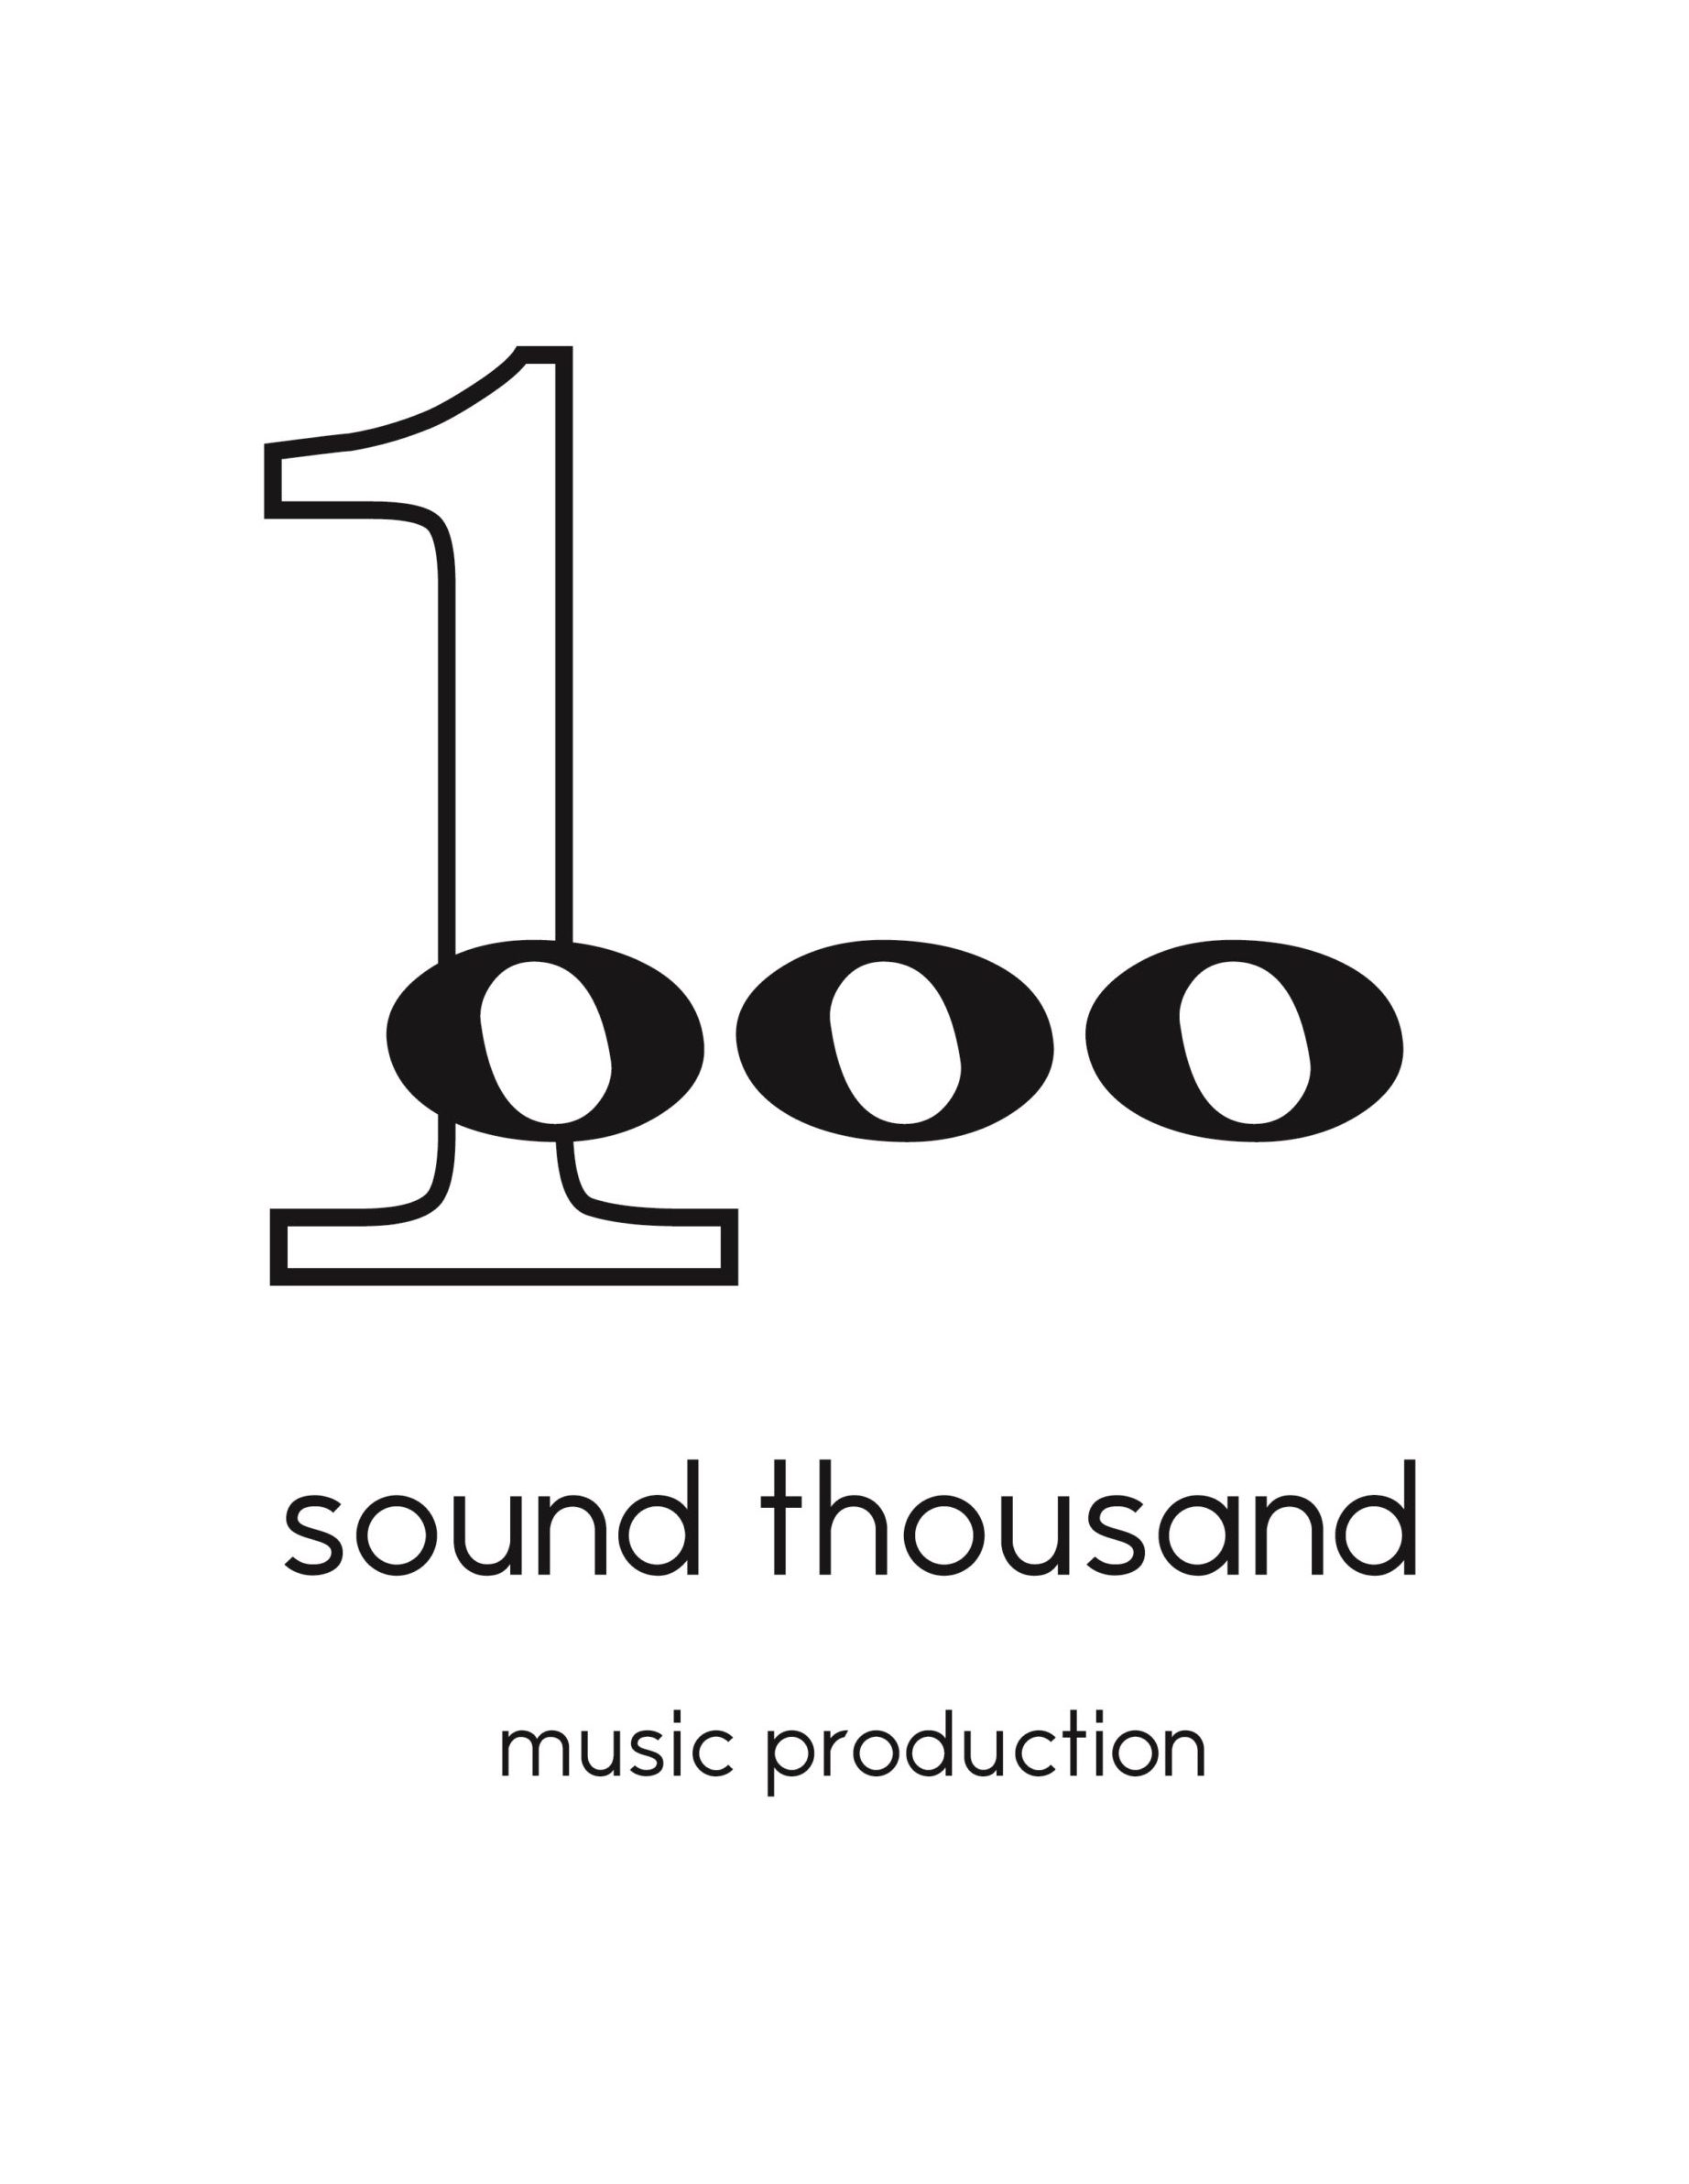 SOUND 1000 music production